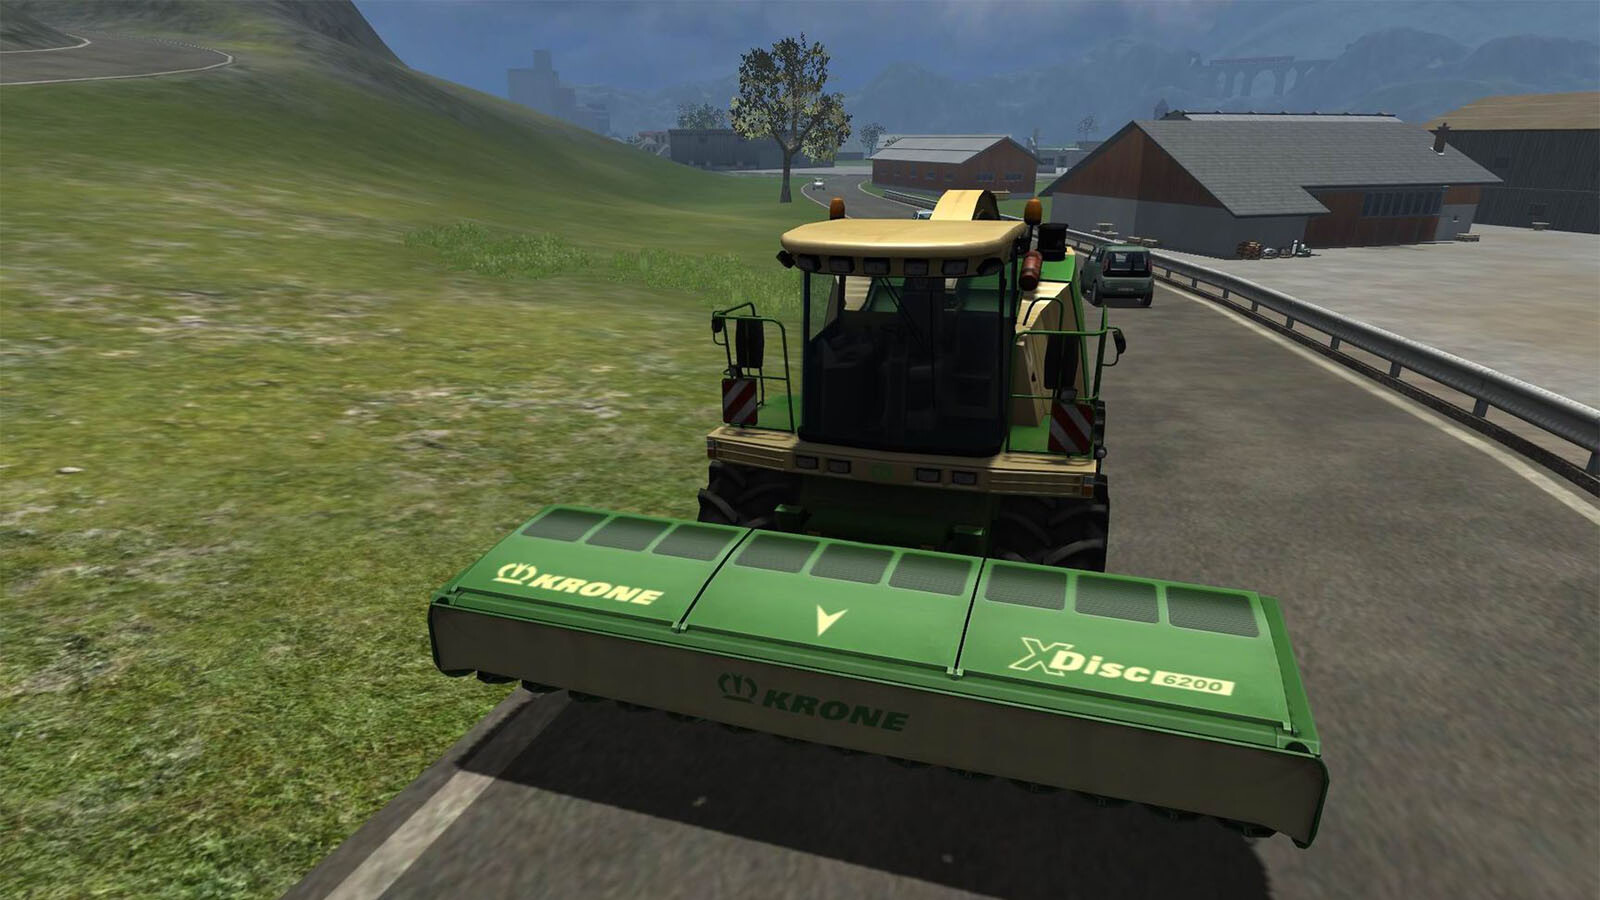 Buy Farming Simulator 2011: Classics PC DLC Steam Key